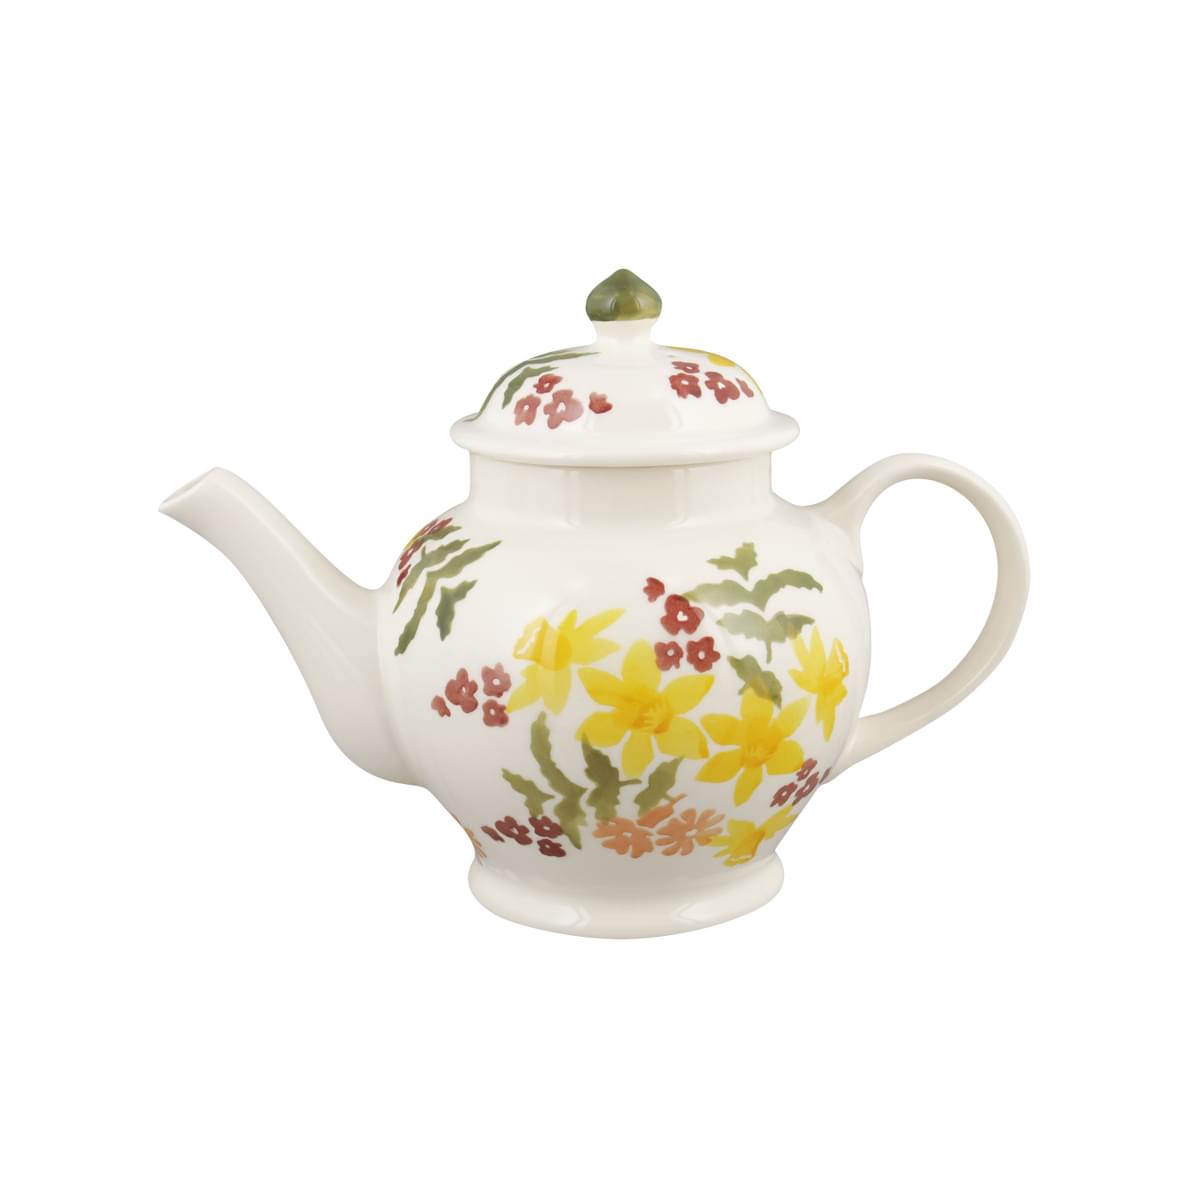 Wild Daffodils 3 Mug Teapot